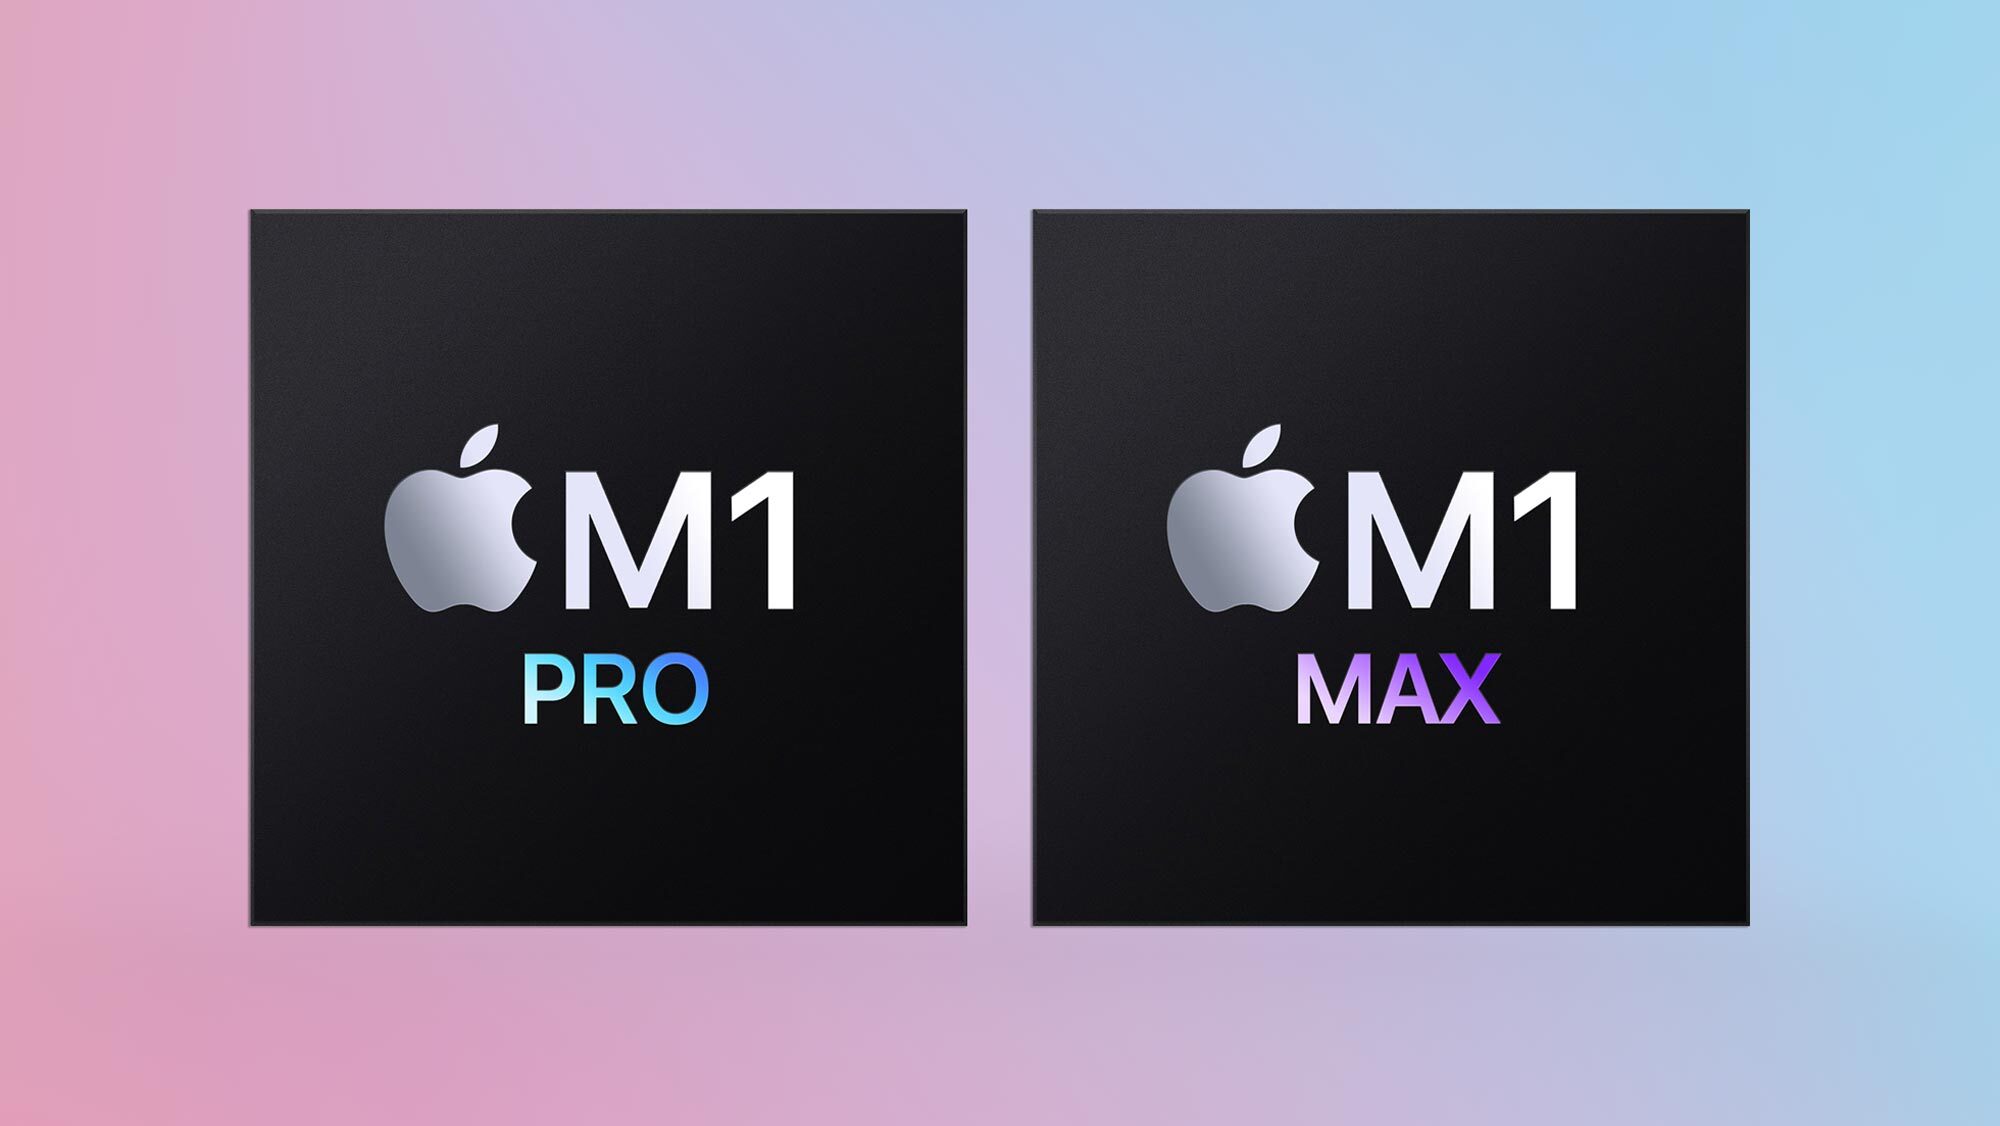 M1 Pro vs M1 Max